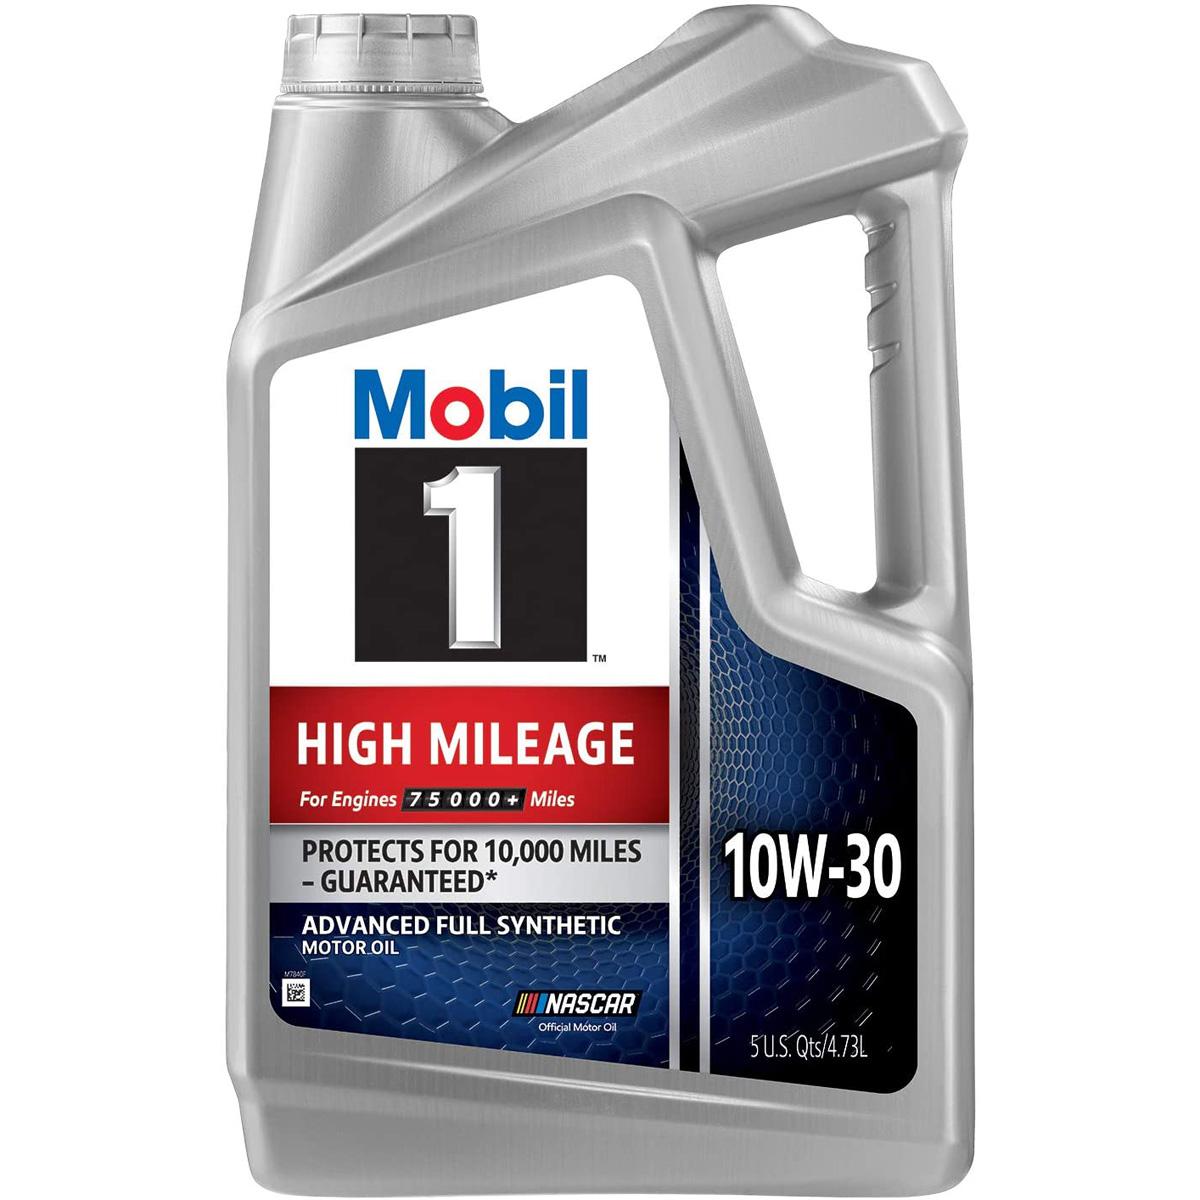 5-Quart Mobil 1 High Mileage 10W-30 Motor Oil for $14.99